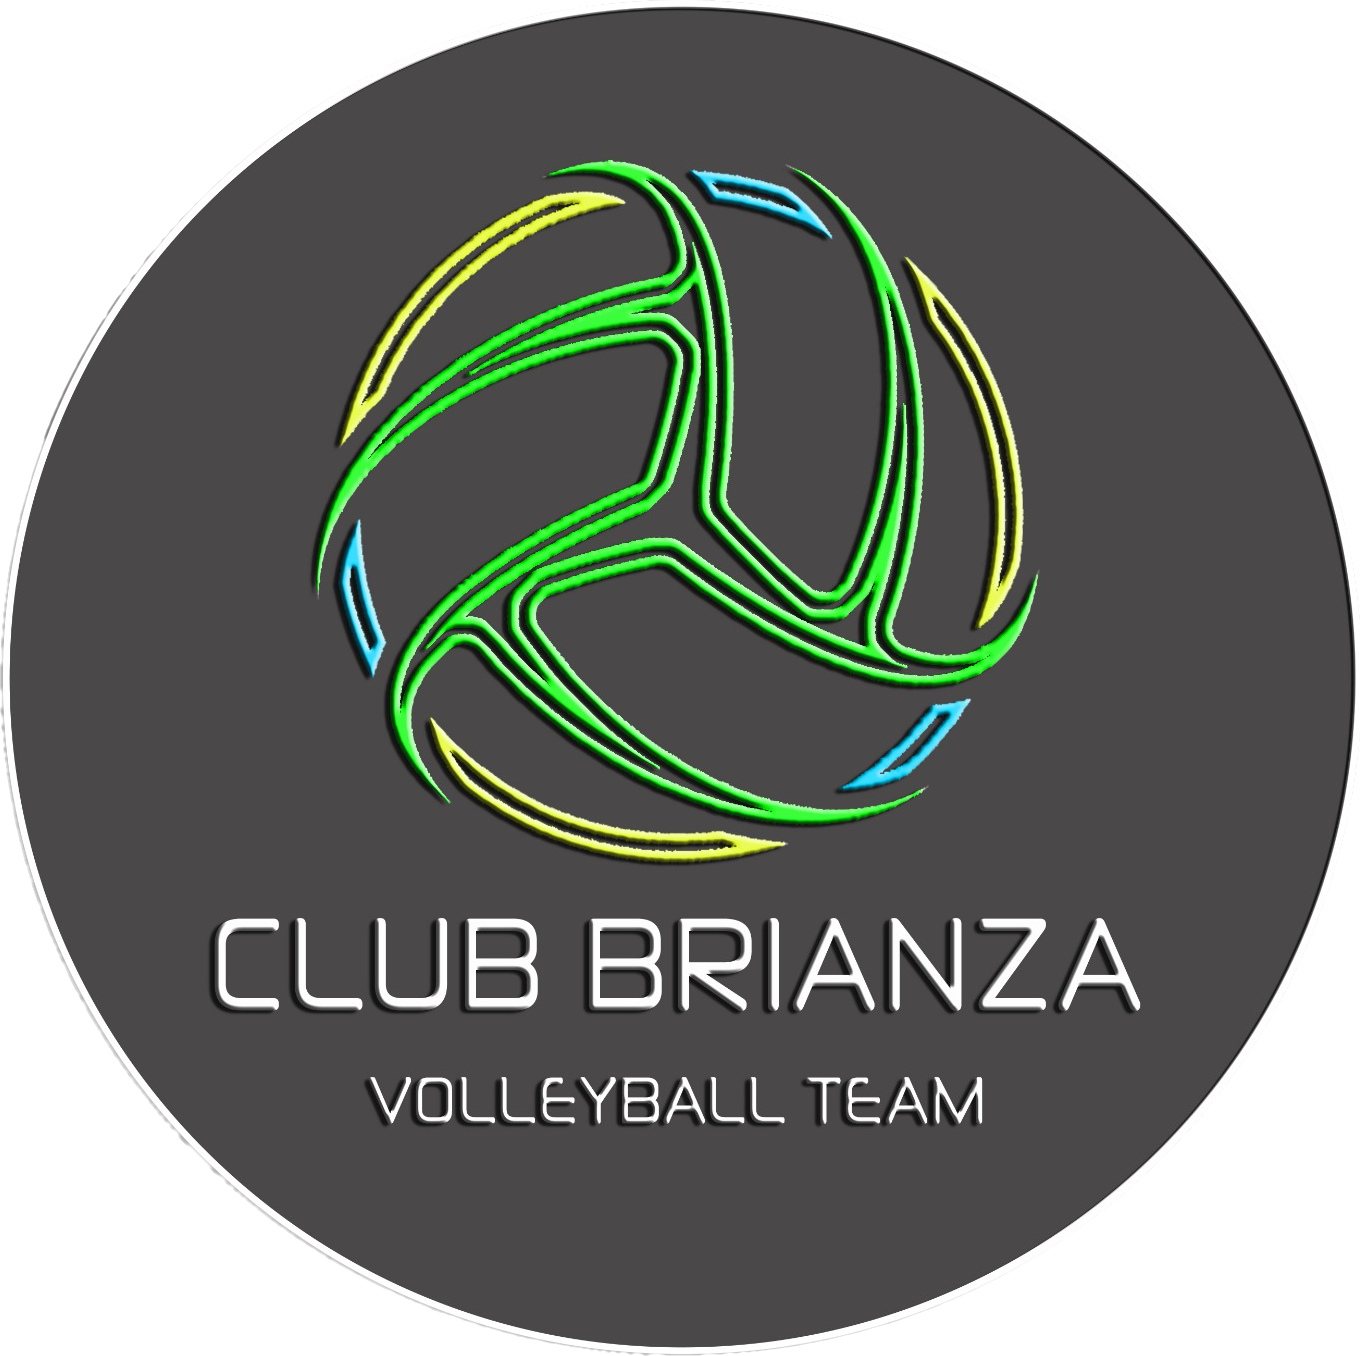 Club Brianza Volleyball Team